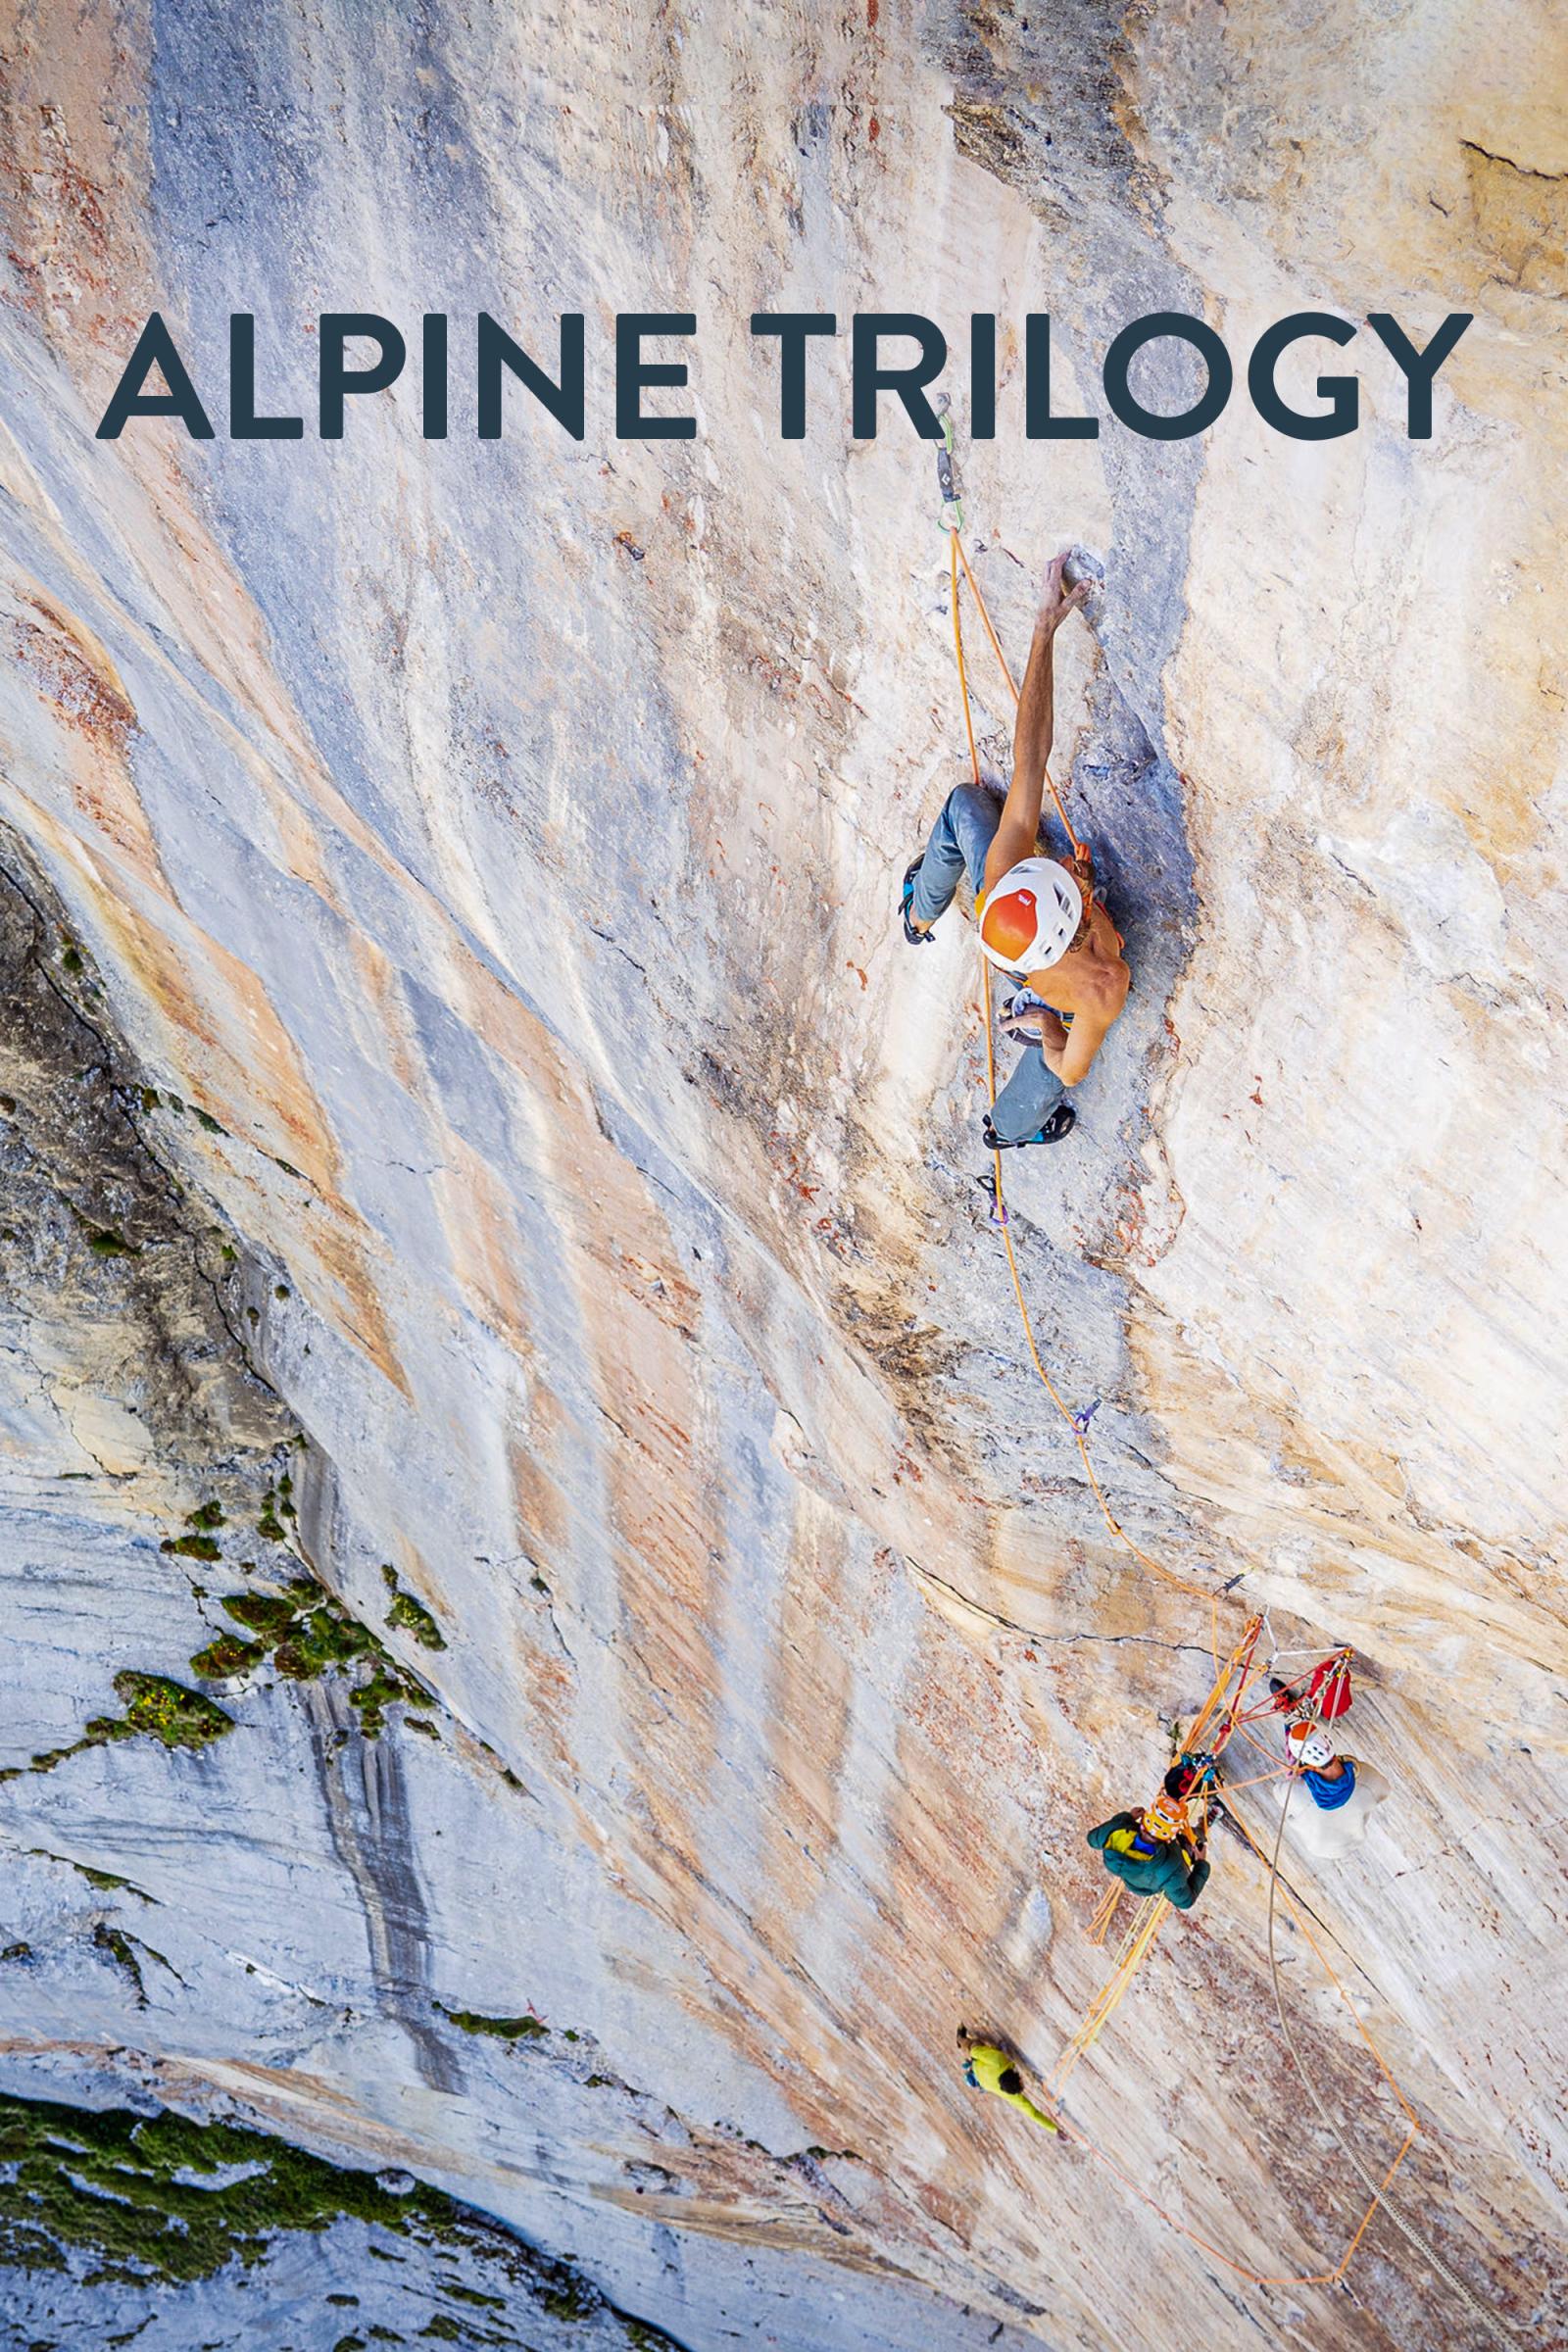 Where to stream Alpine Trilogy